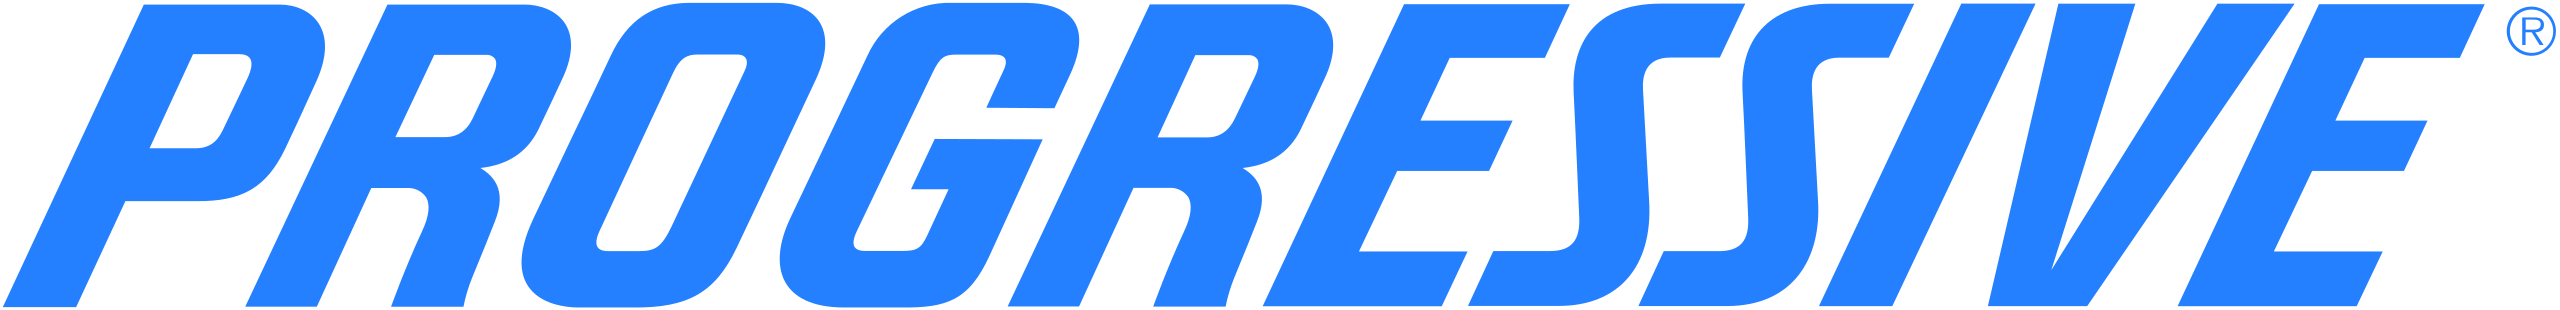 Progressive Insurance Logo